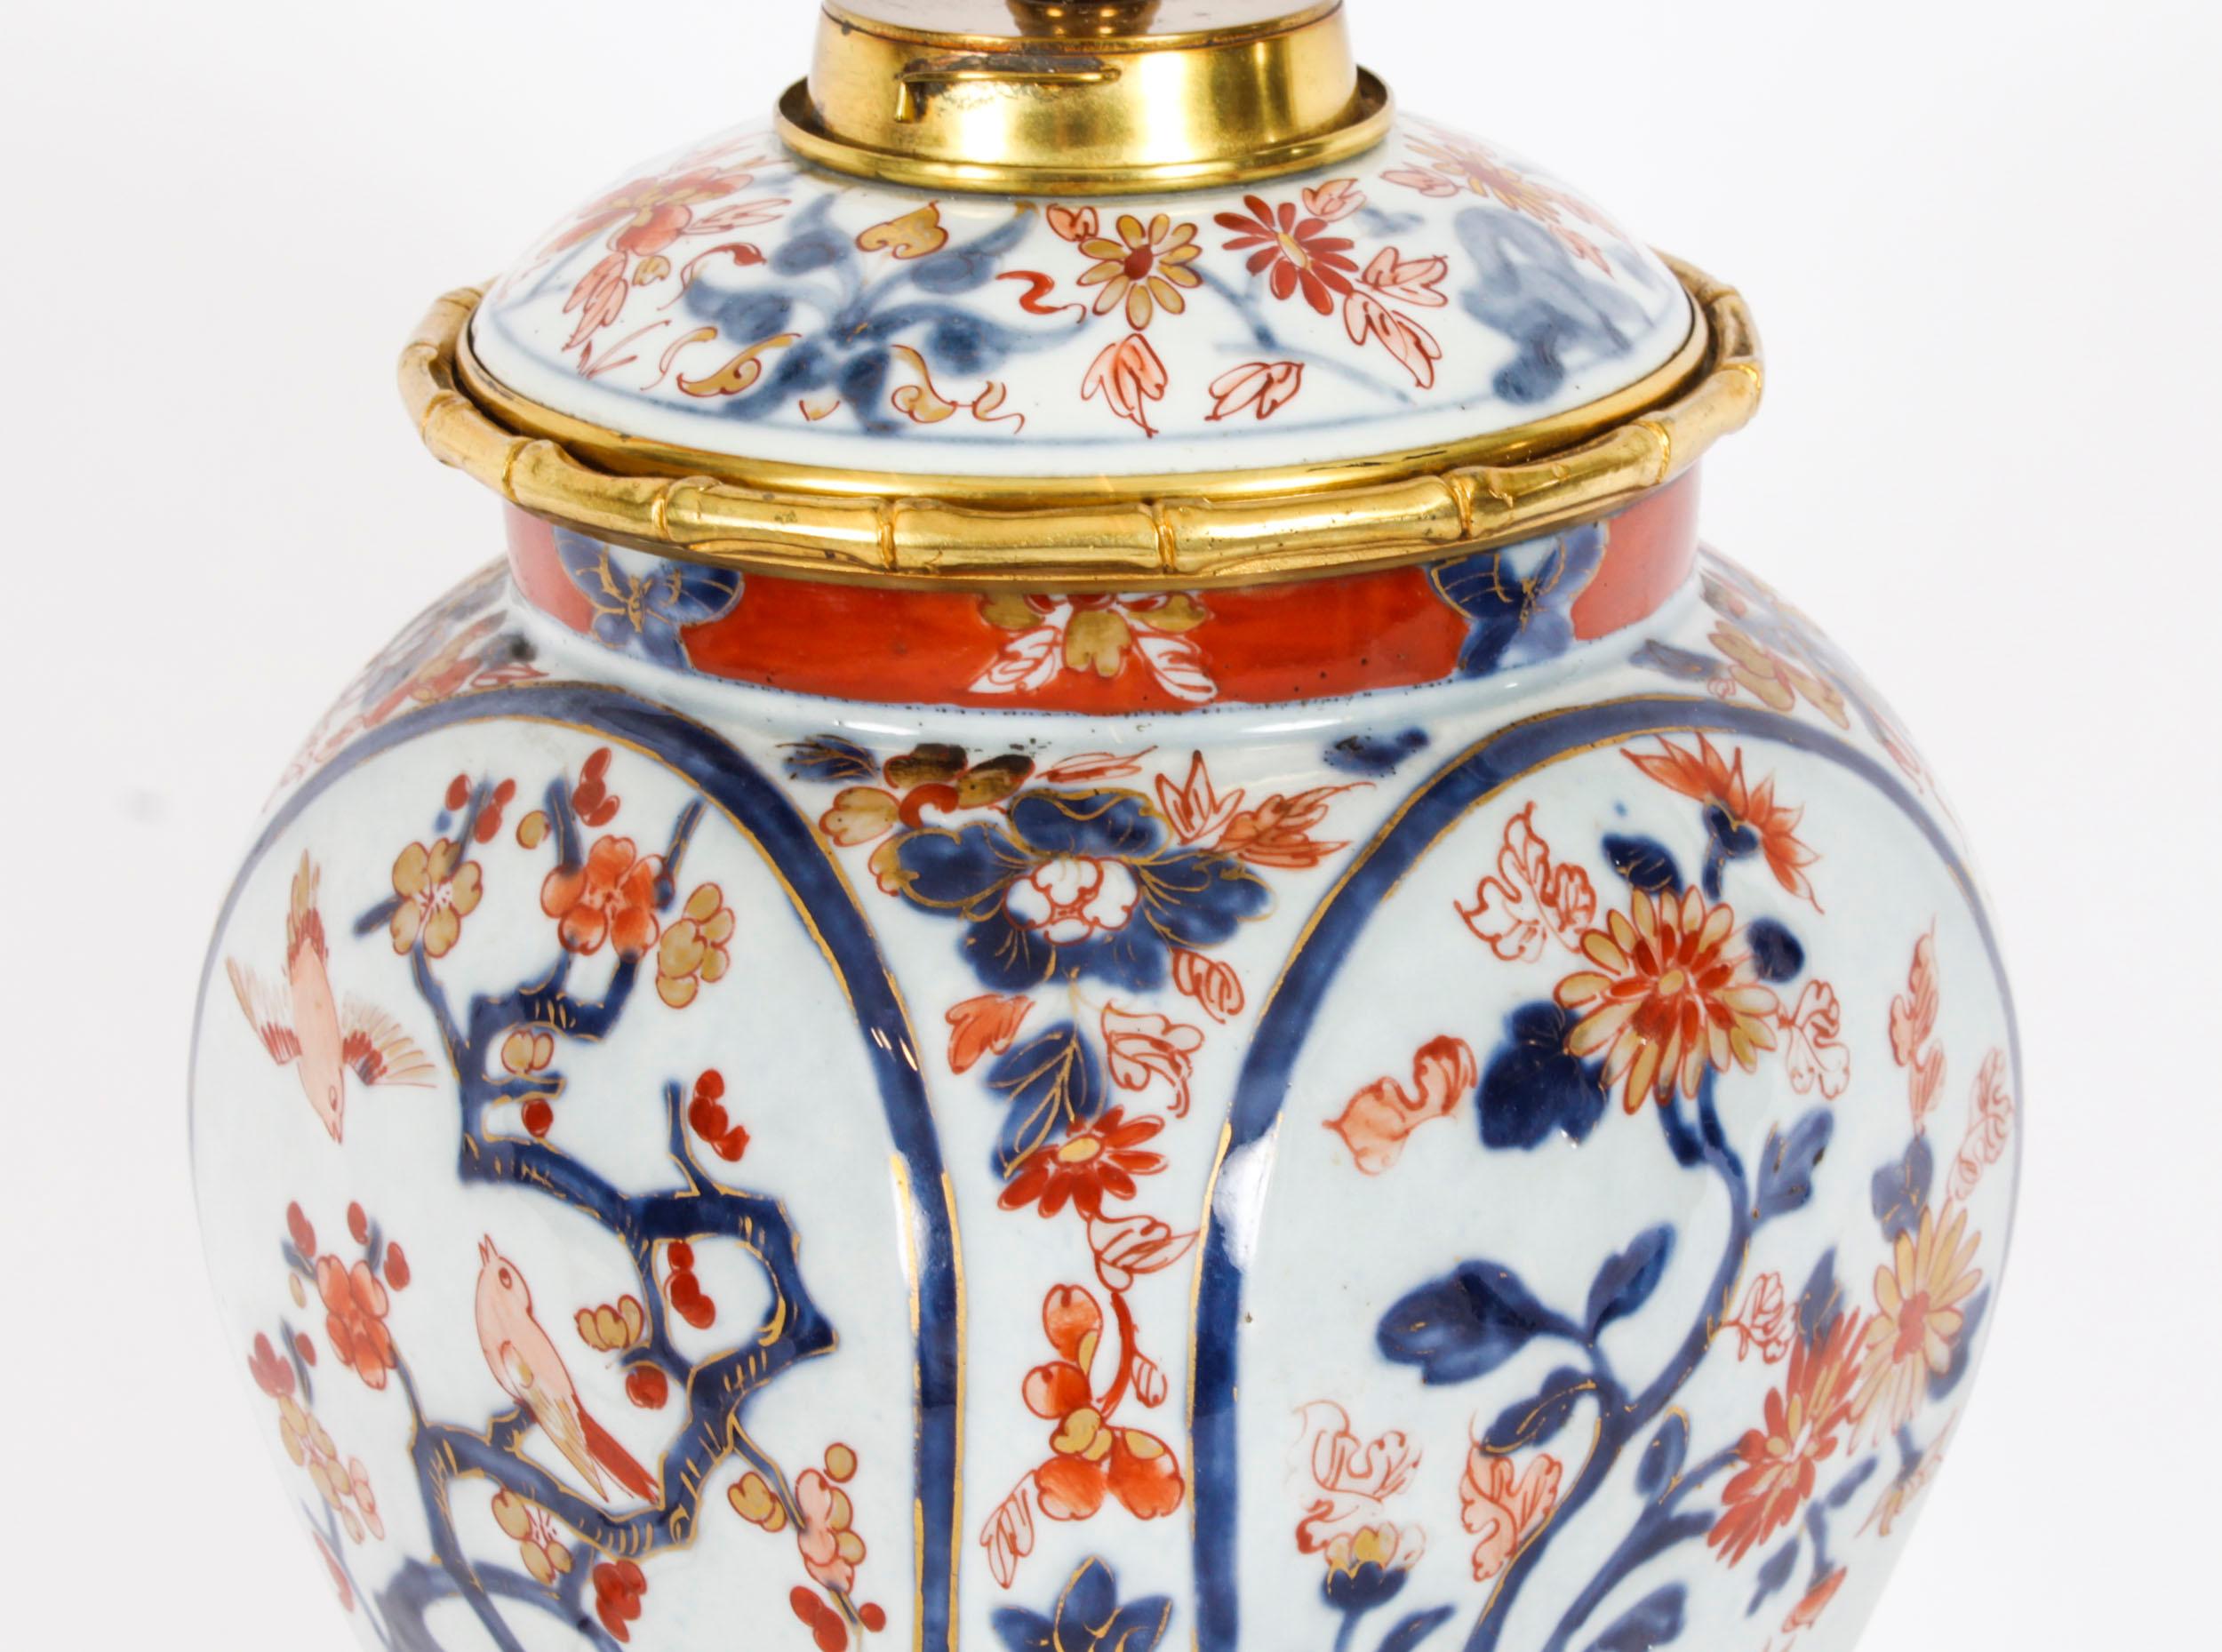 Antique Japanese Imari Porcelain Table Lamp c. 1840 19th Century For Sale 1